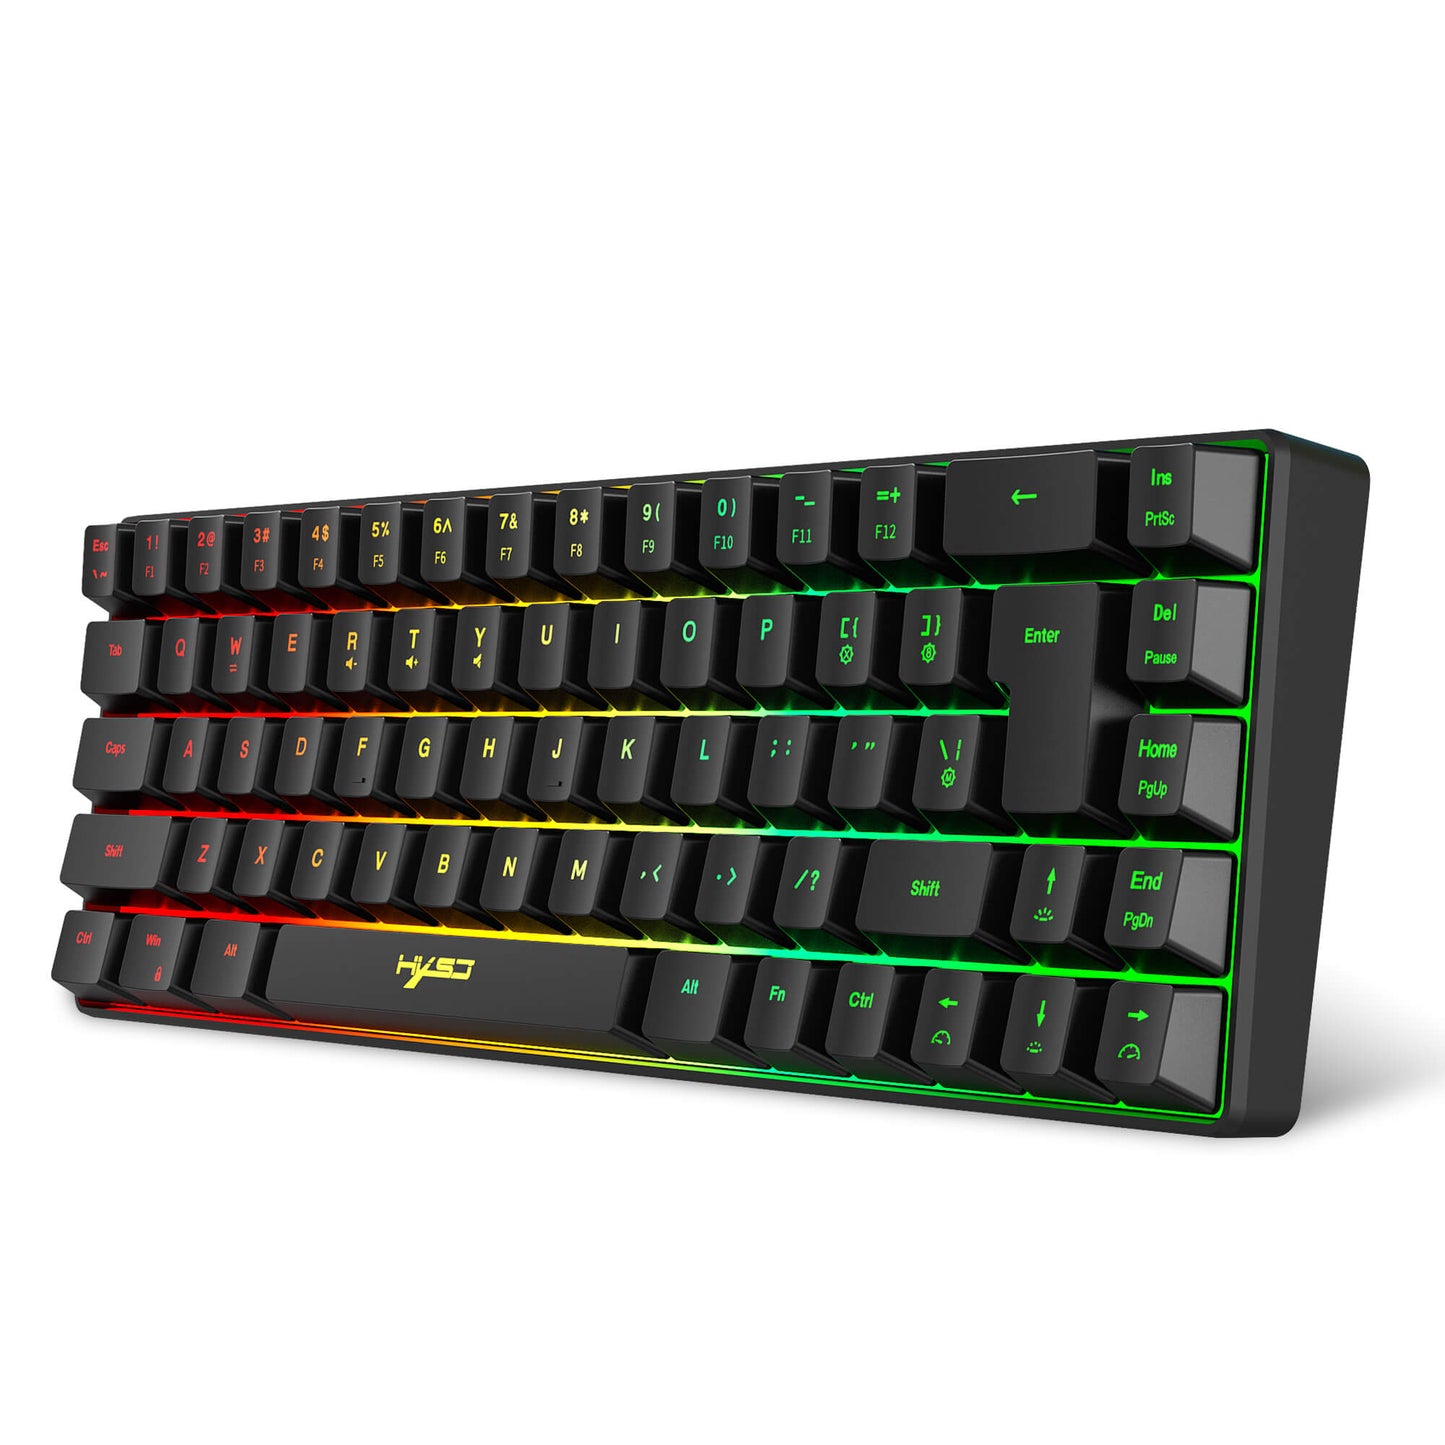 Wired Gaming Keyboard, 68-Key RGB Lighting Gaming Keyboard, RGB Backlit Mini Keyboard, Small Ultra-Compact 68 Keys Keyboard for PC/Mac Gamer, Typist, Travel, Easy to Carry on Business Trip - Black